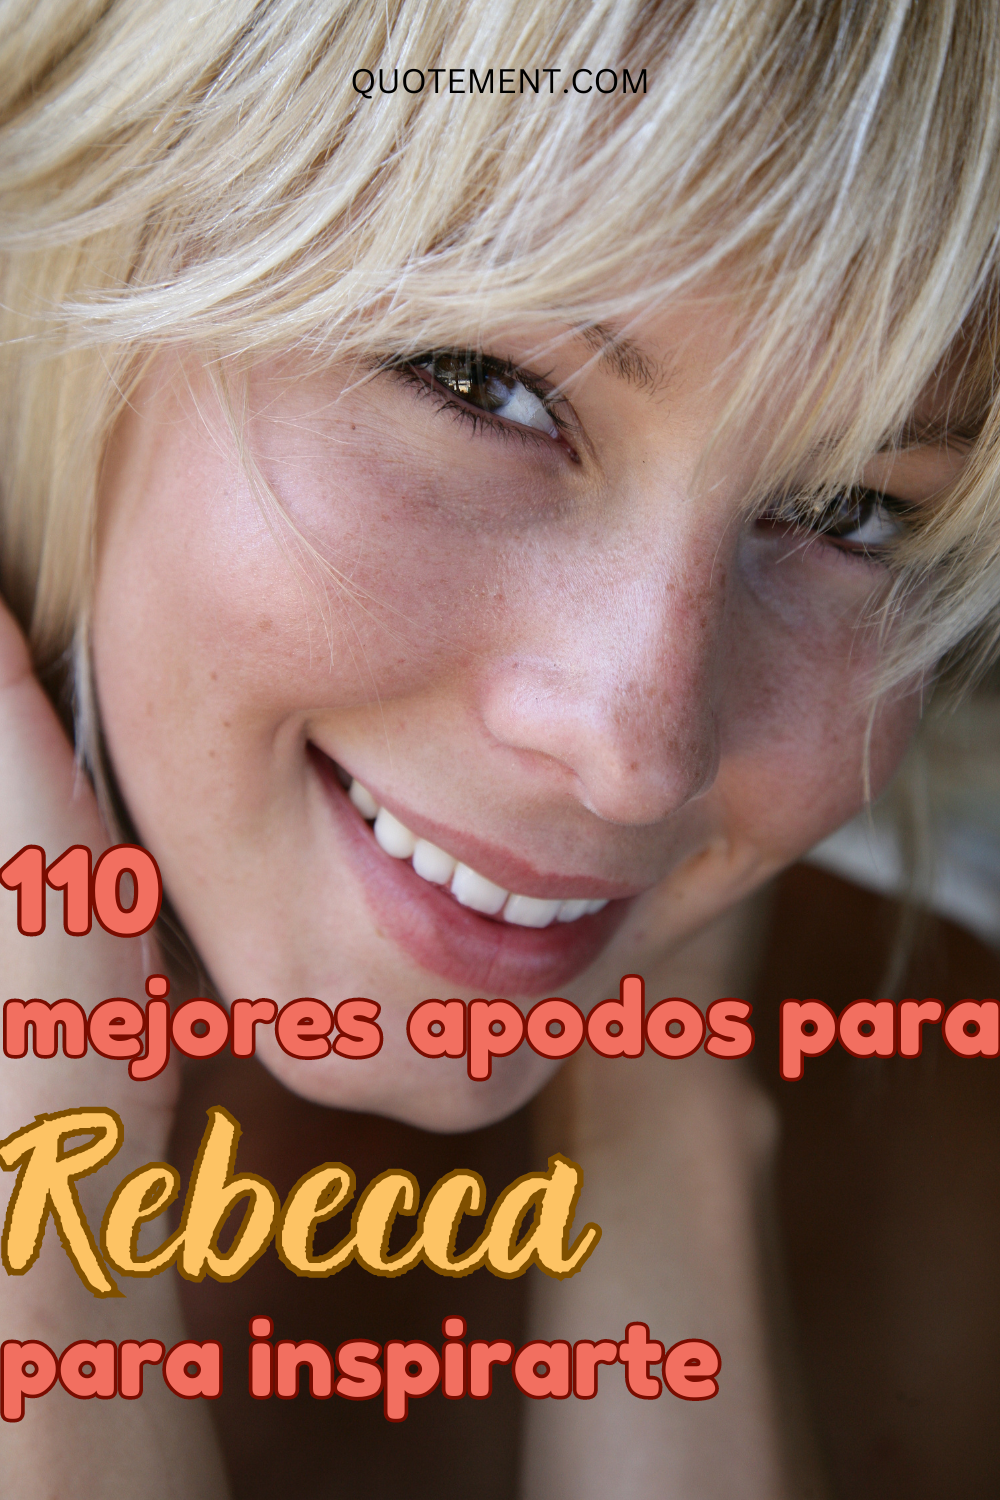 110 mejores apodos para Rebecca para que se sienta especial